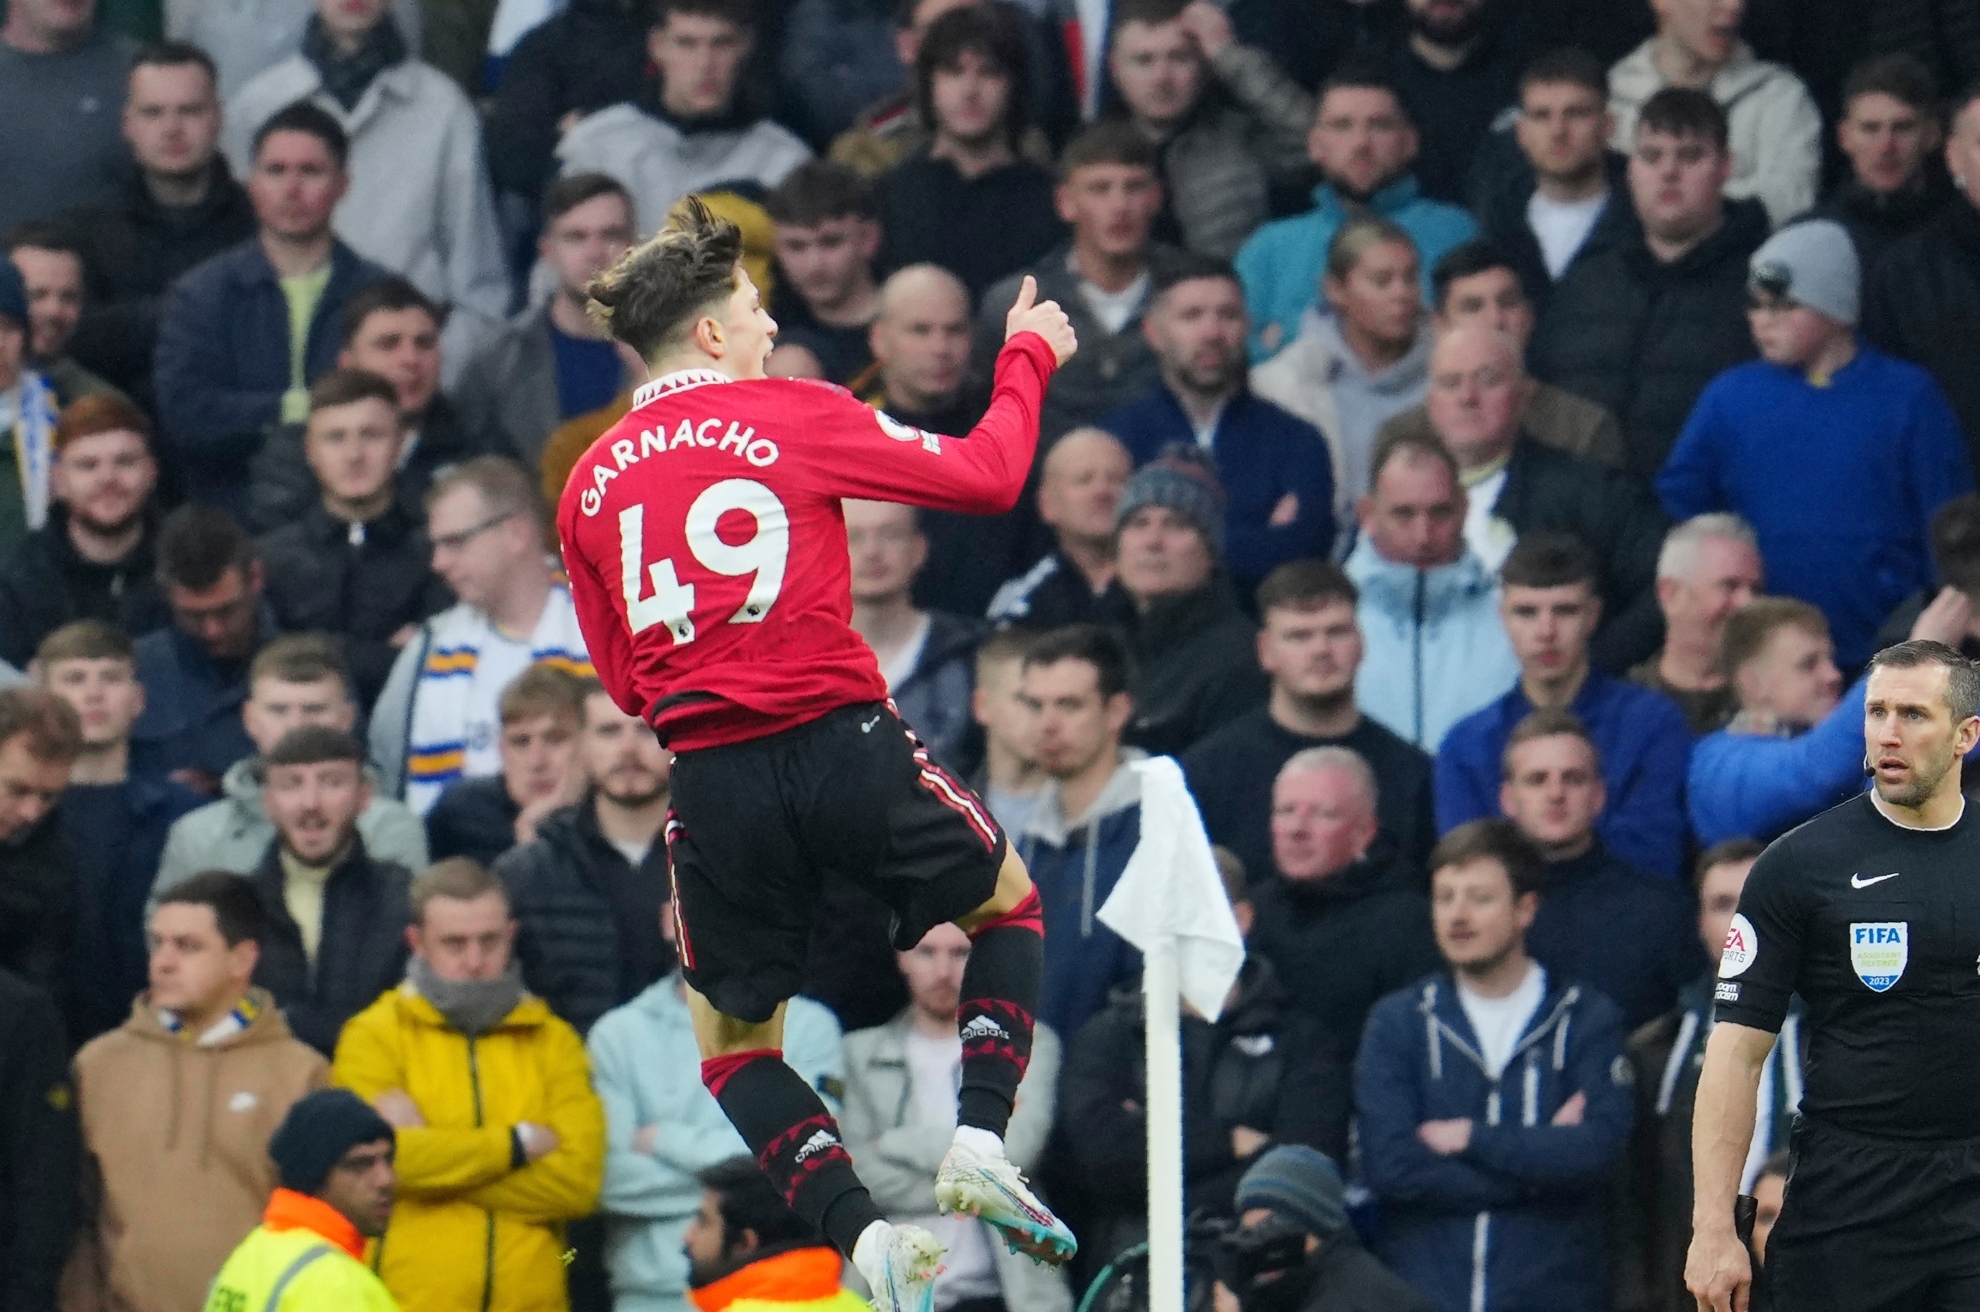 Garnacho celebra un gol con el Manchester United